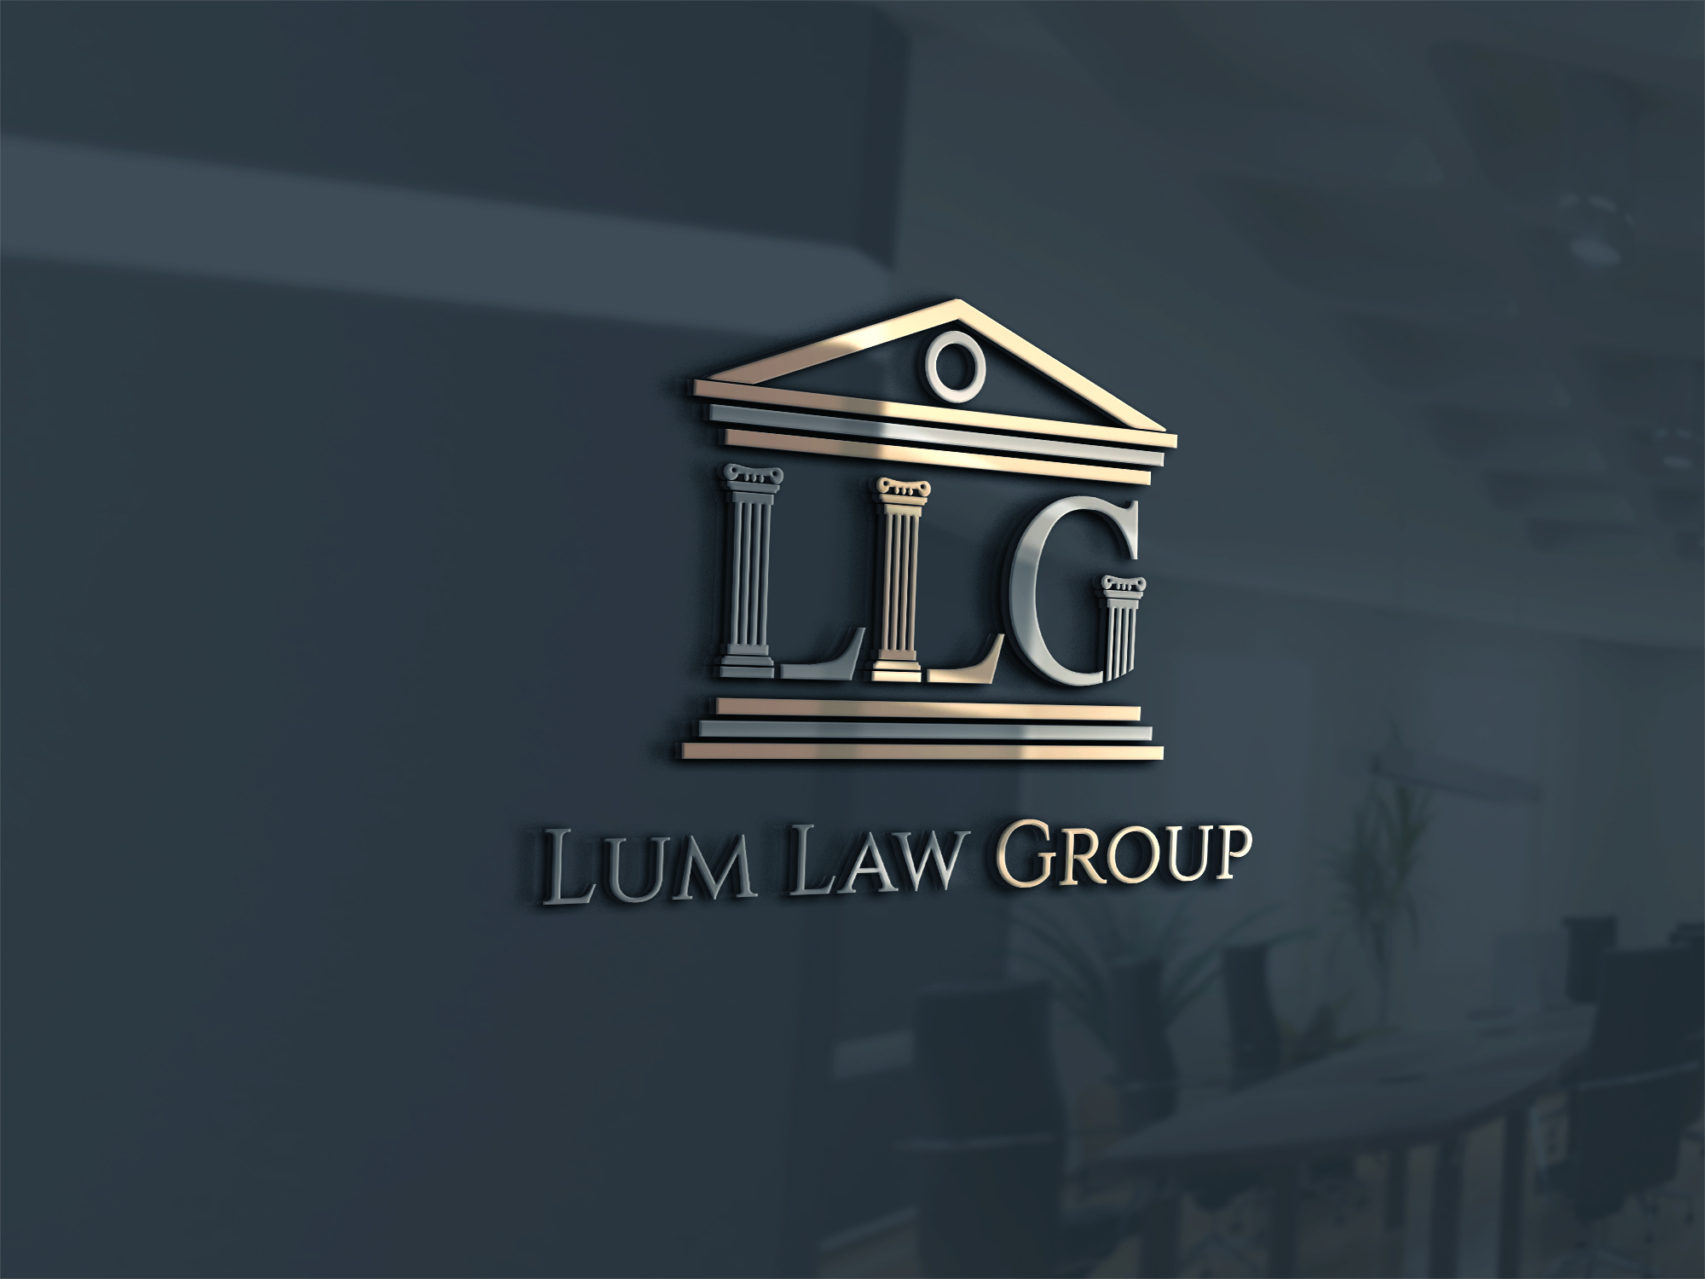 Lum Law Group wall